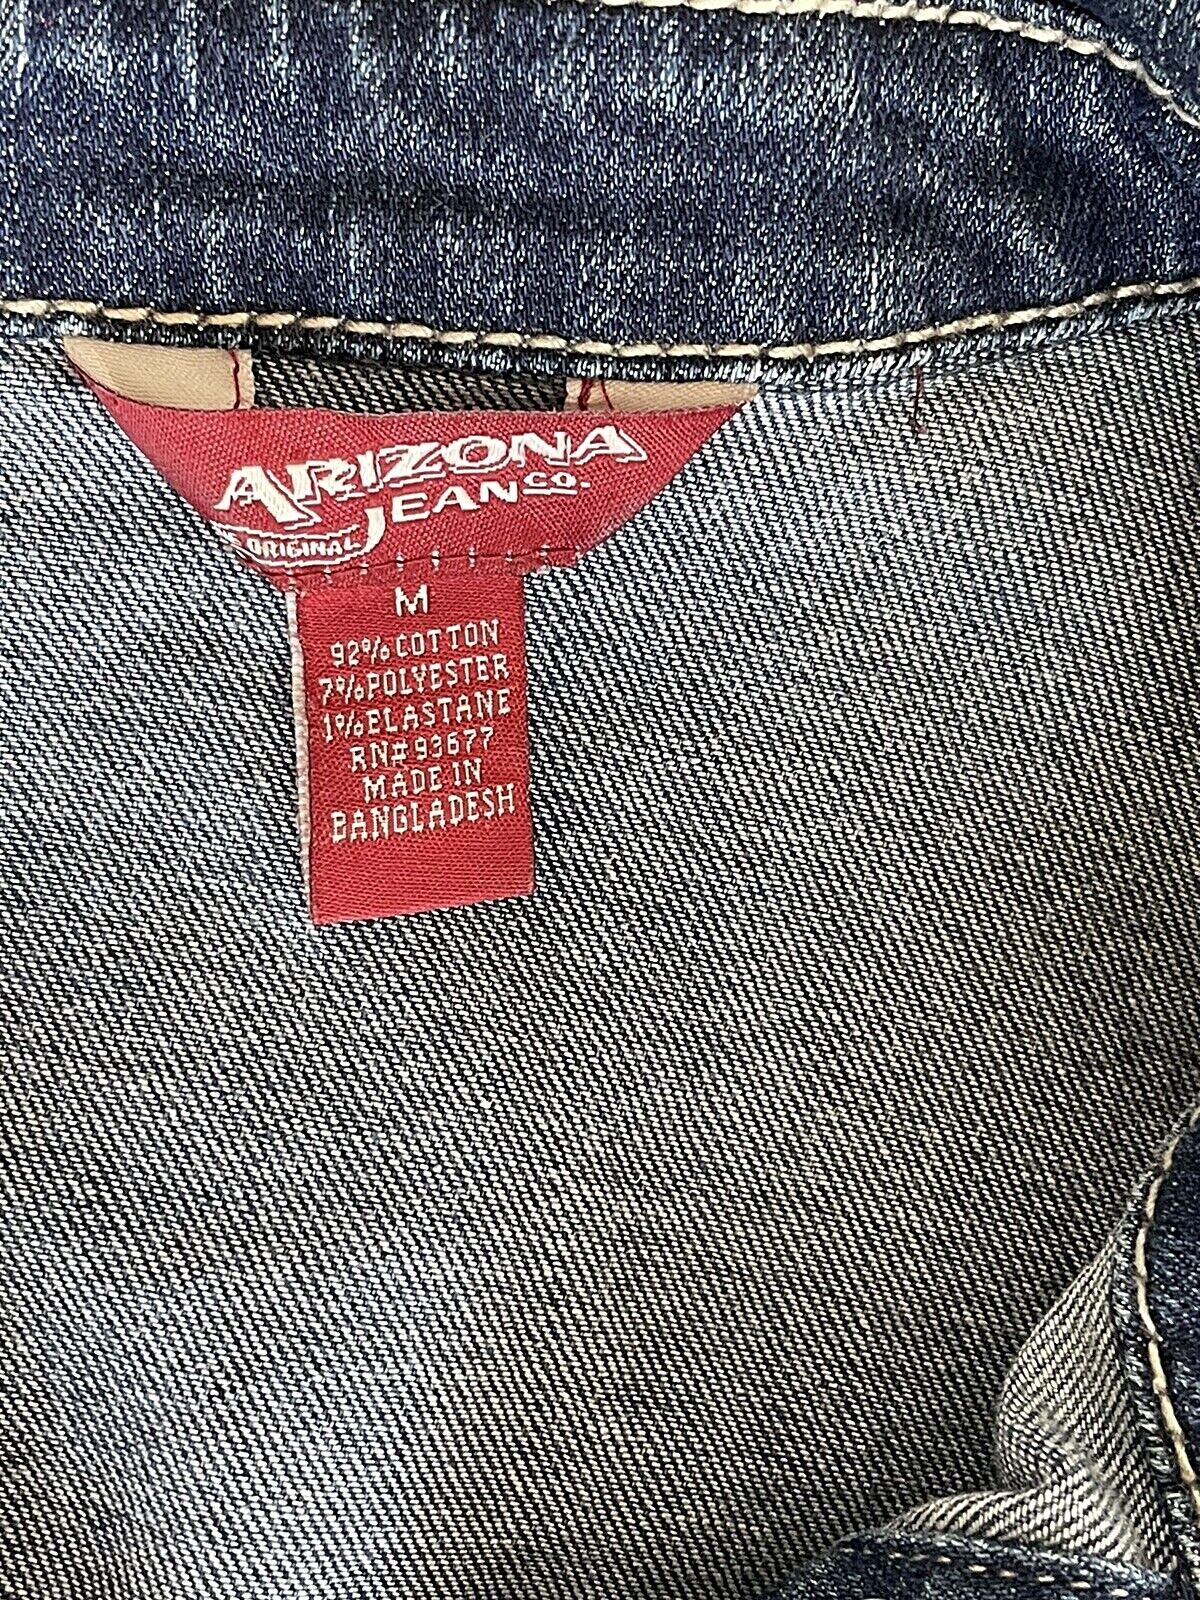 Arizona Denim Blue Jean Jacket Size M - image 2